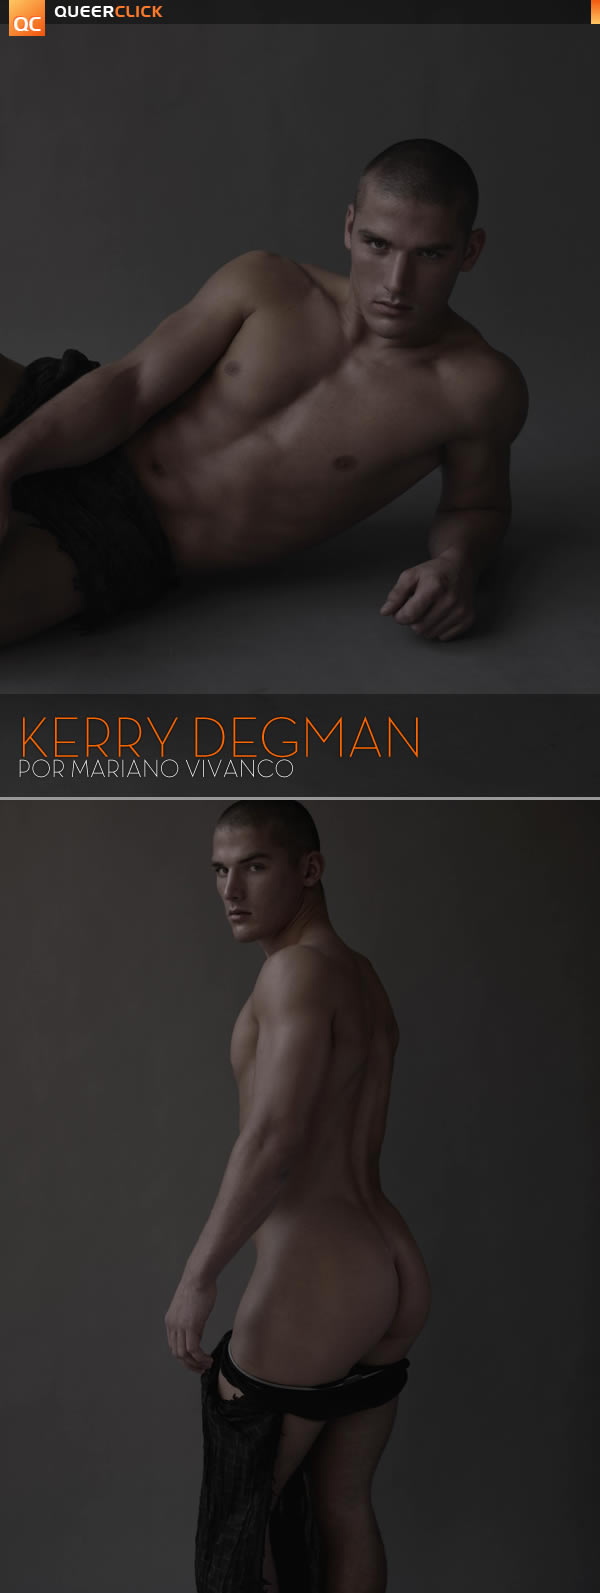 Mariano Vivanco: Kerry Degman